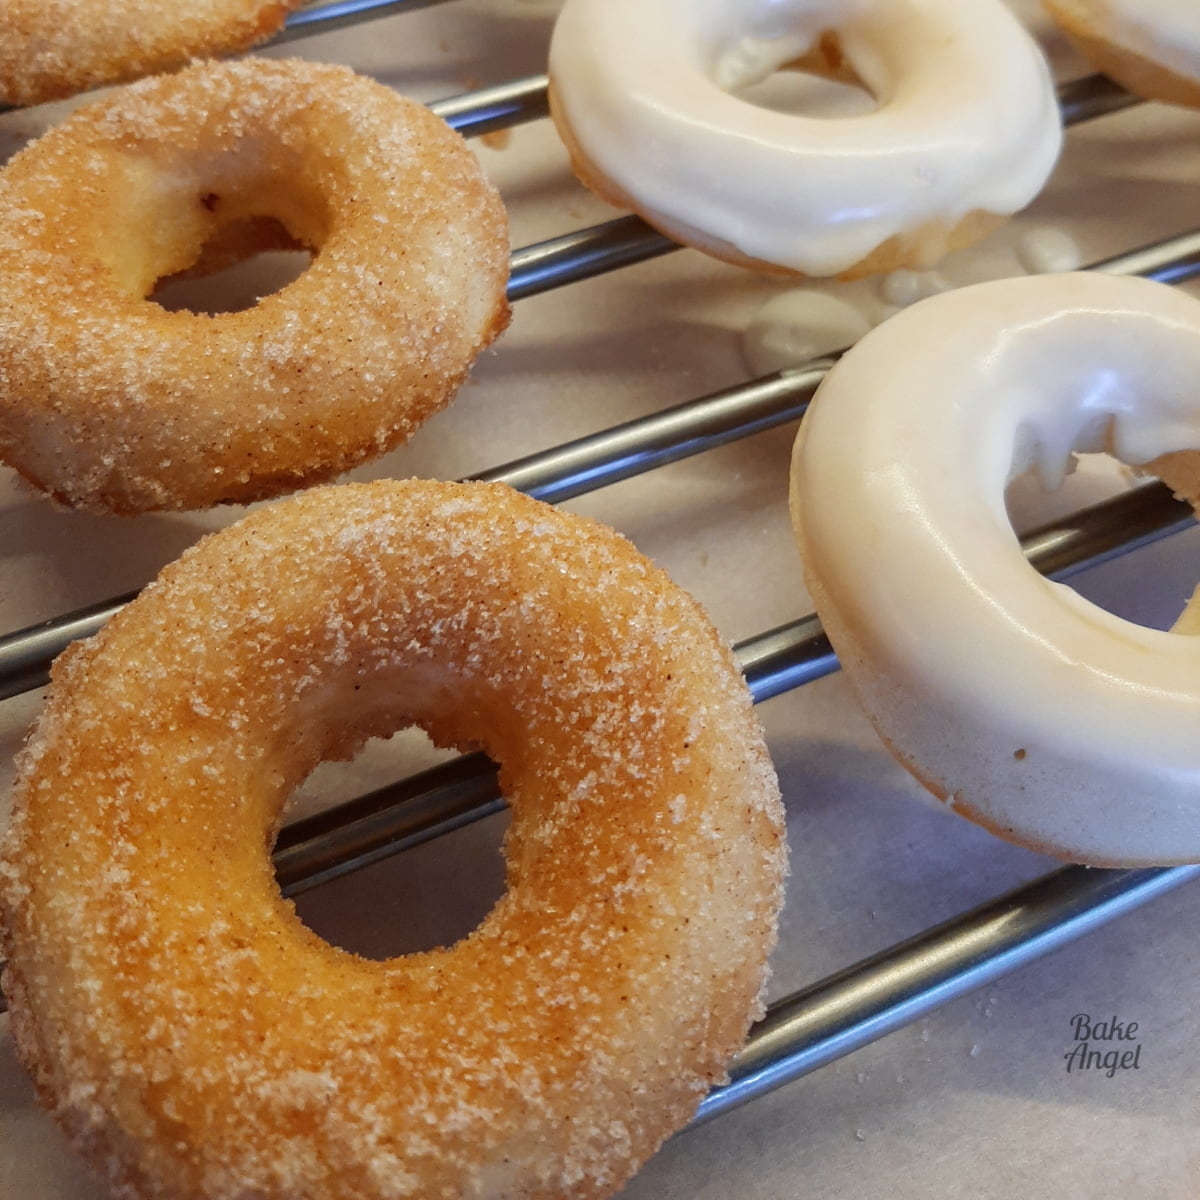 Close up of cinnamon sugar and glazed vegan ring donuts.